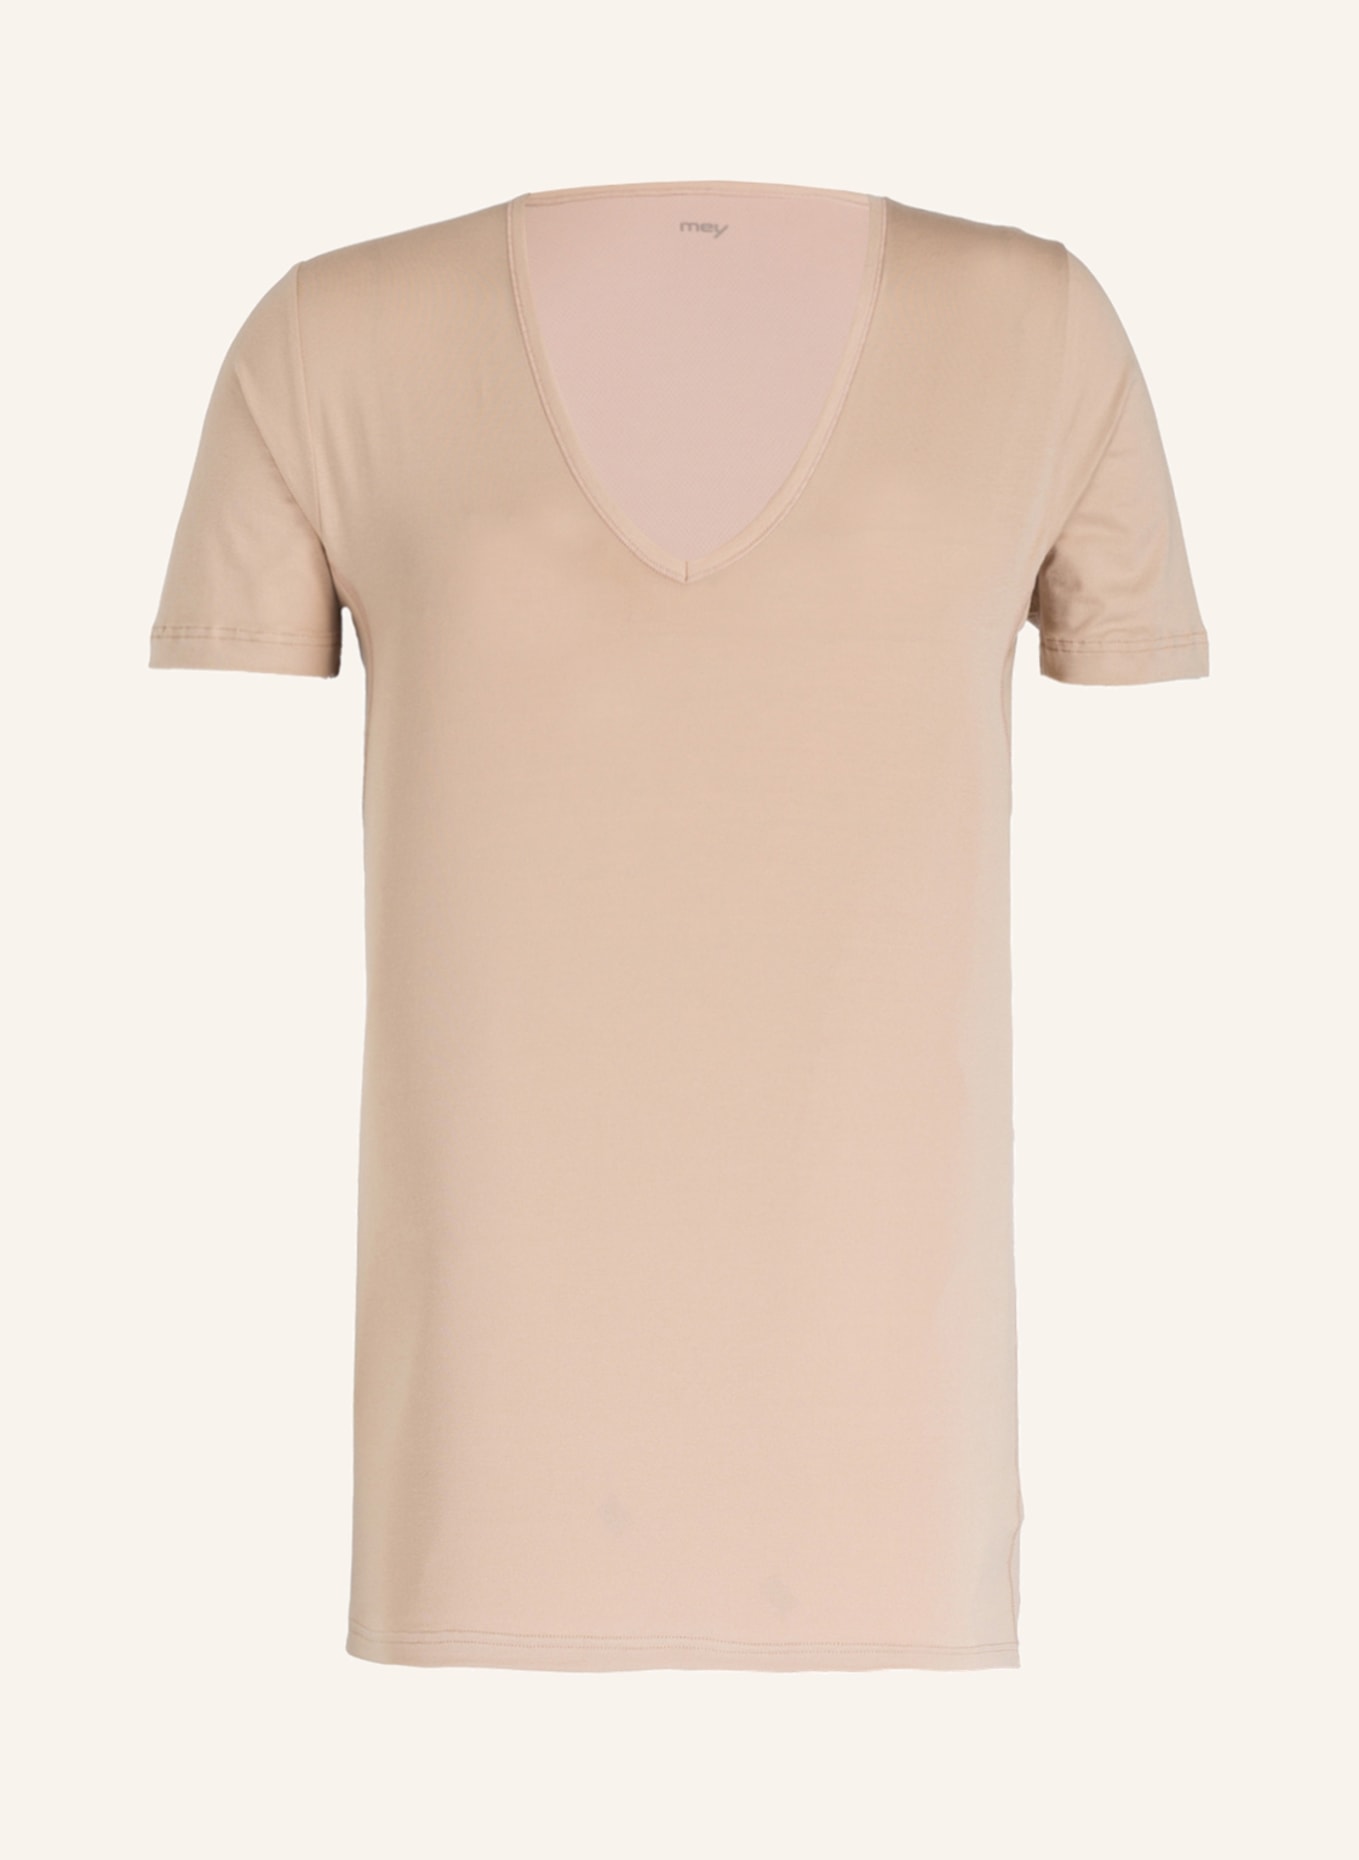 mey V-Shirt Serie DRY COTTON Slim Fit, Farbe: NUDE (Bild 1)